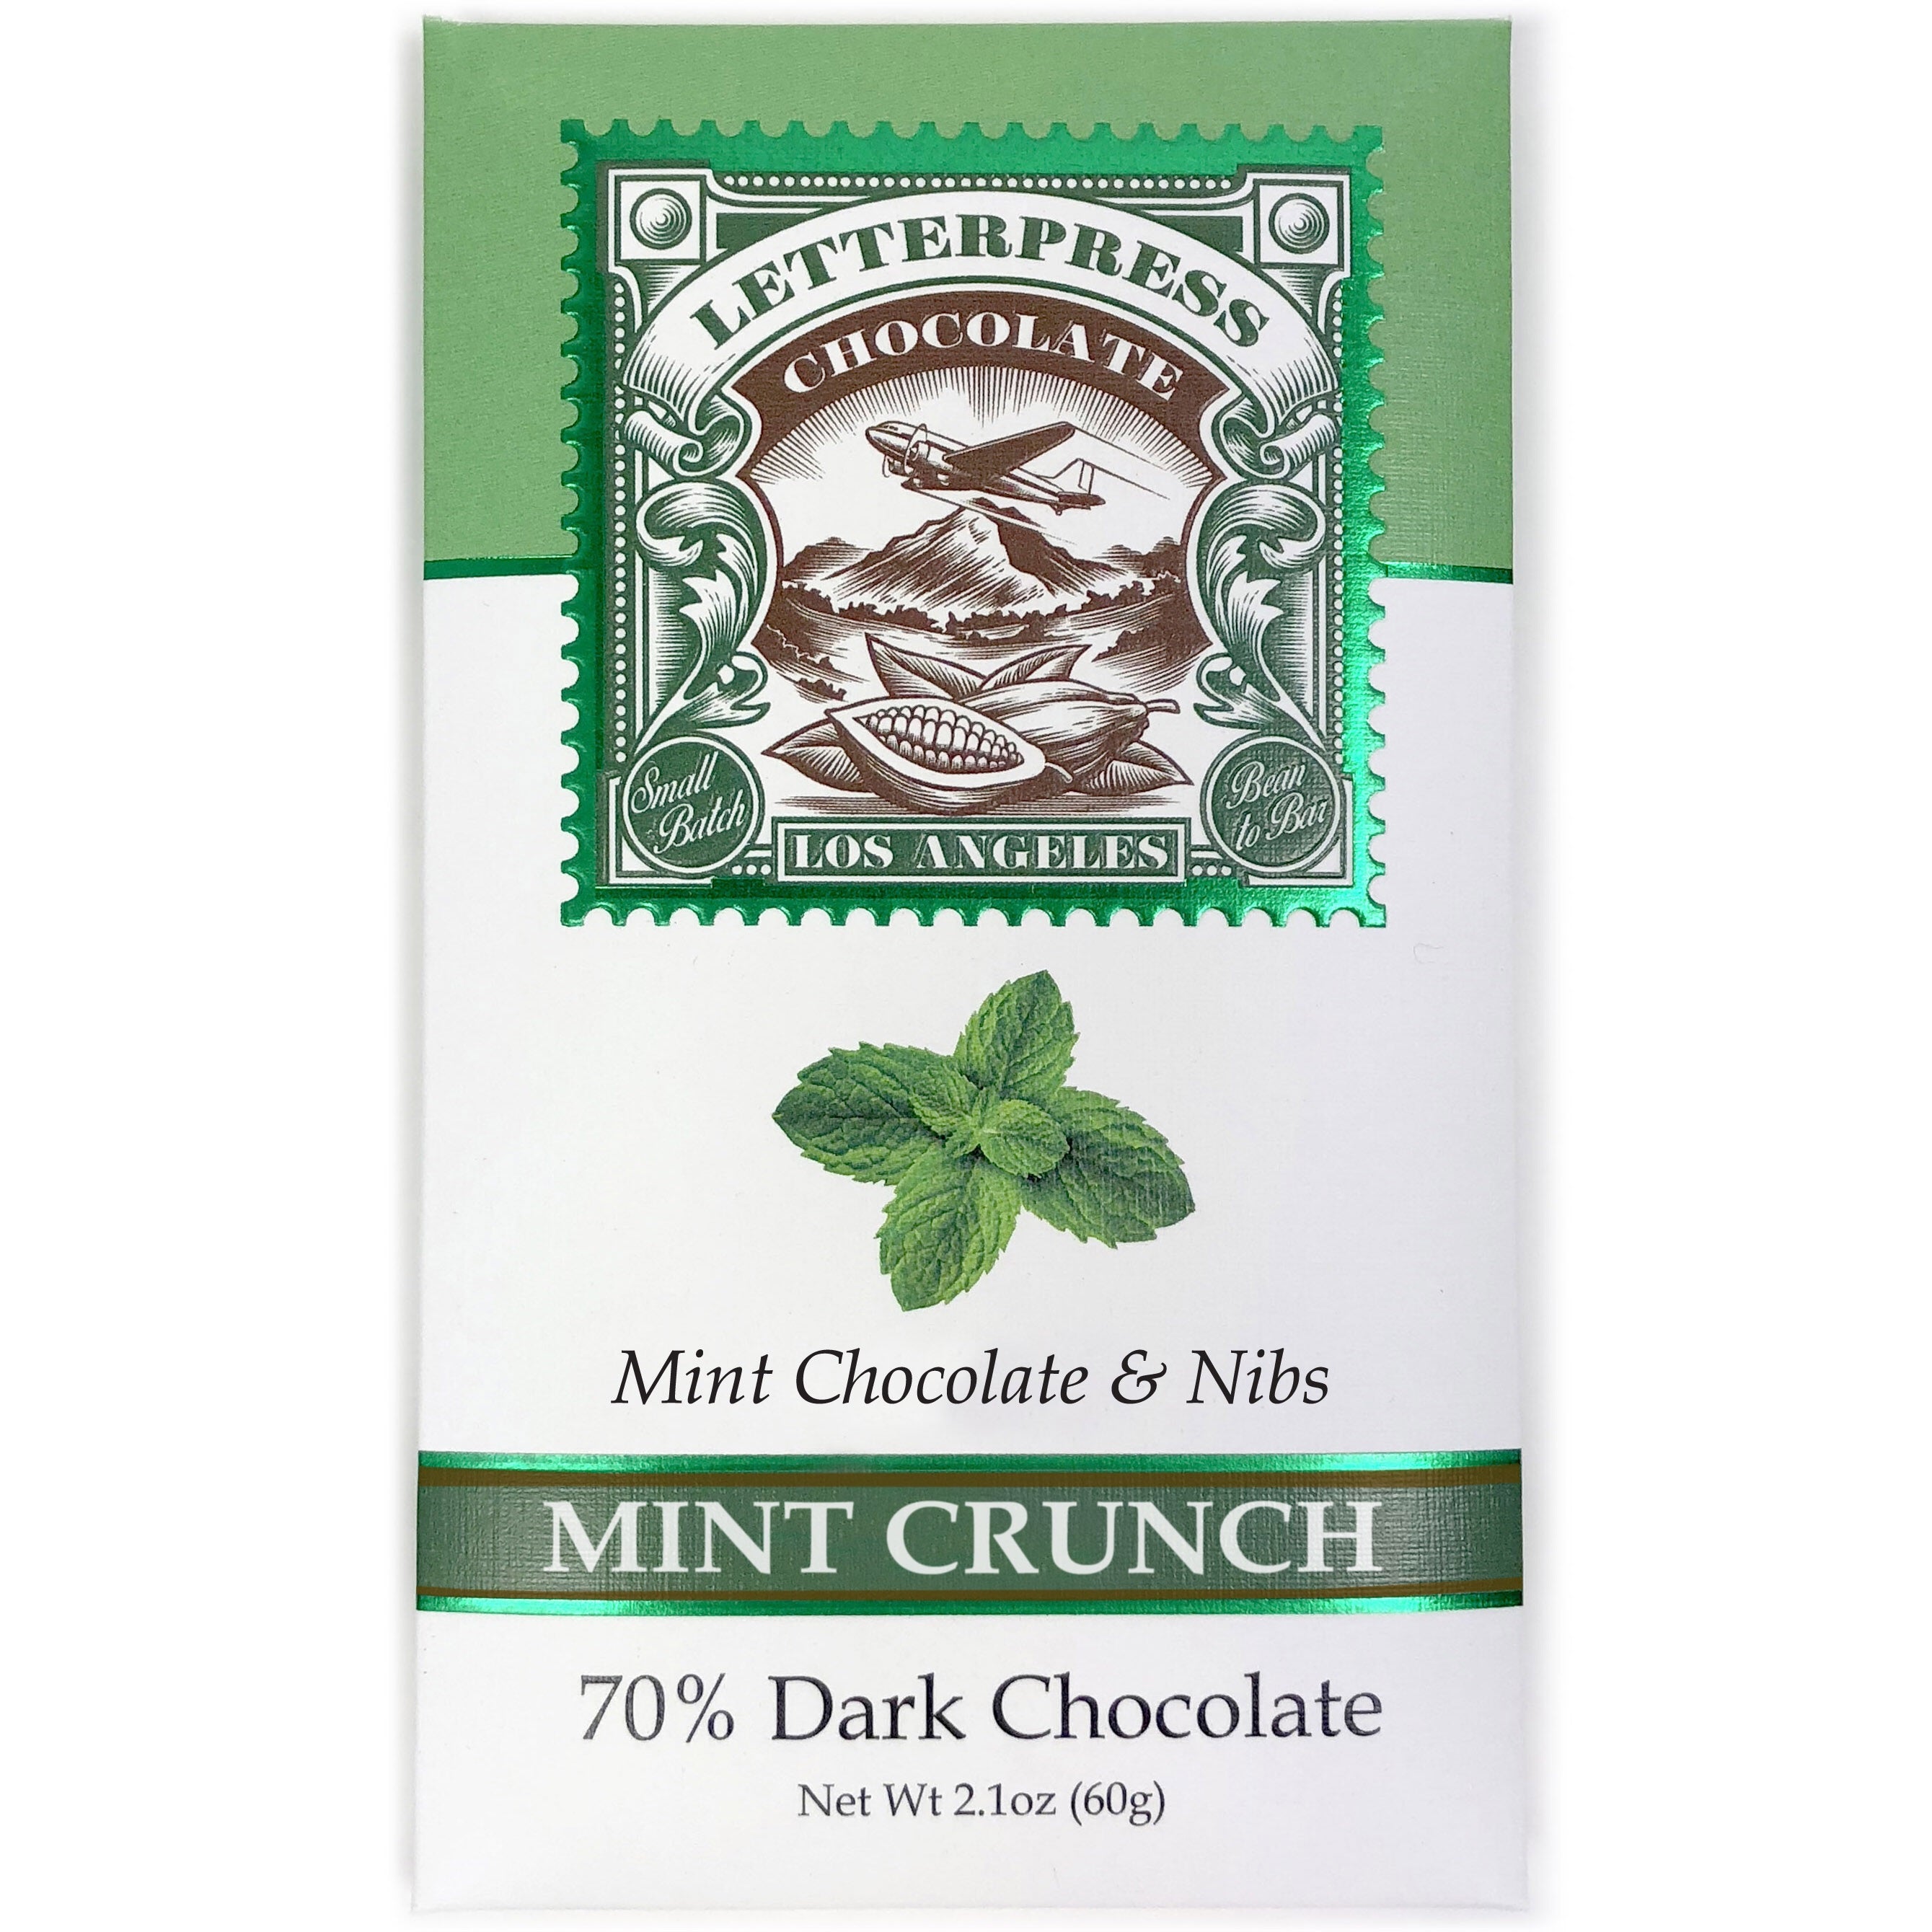 Ashanti Mint Crunch 70% Dark Chocolate packaging on white background